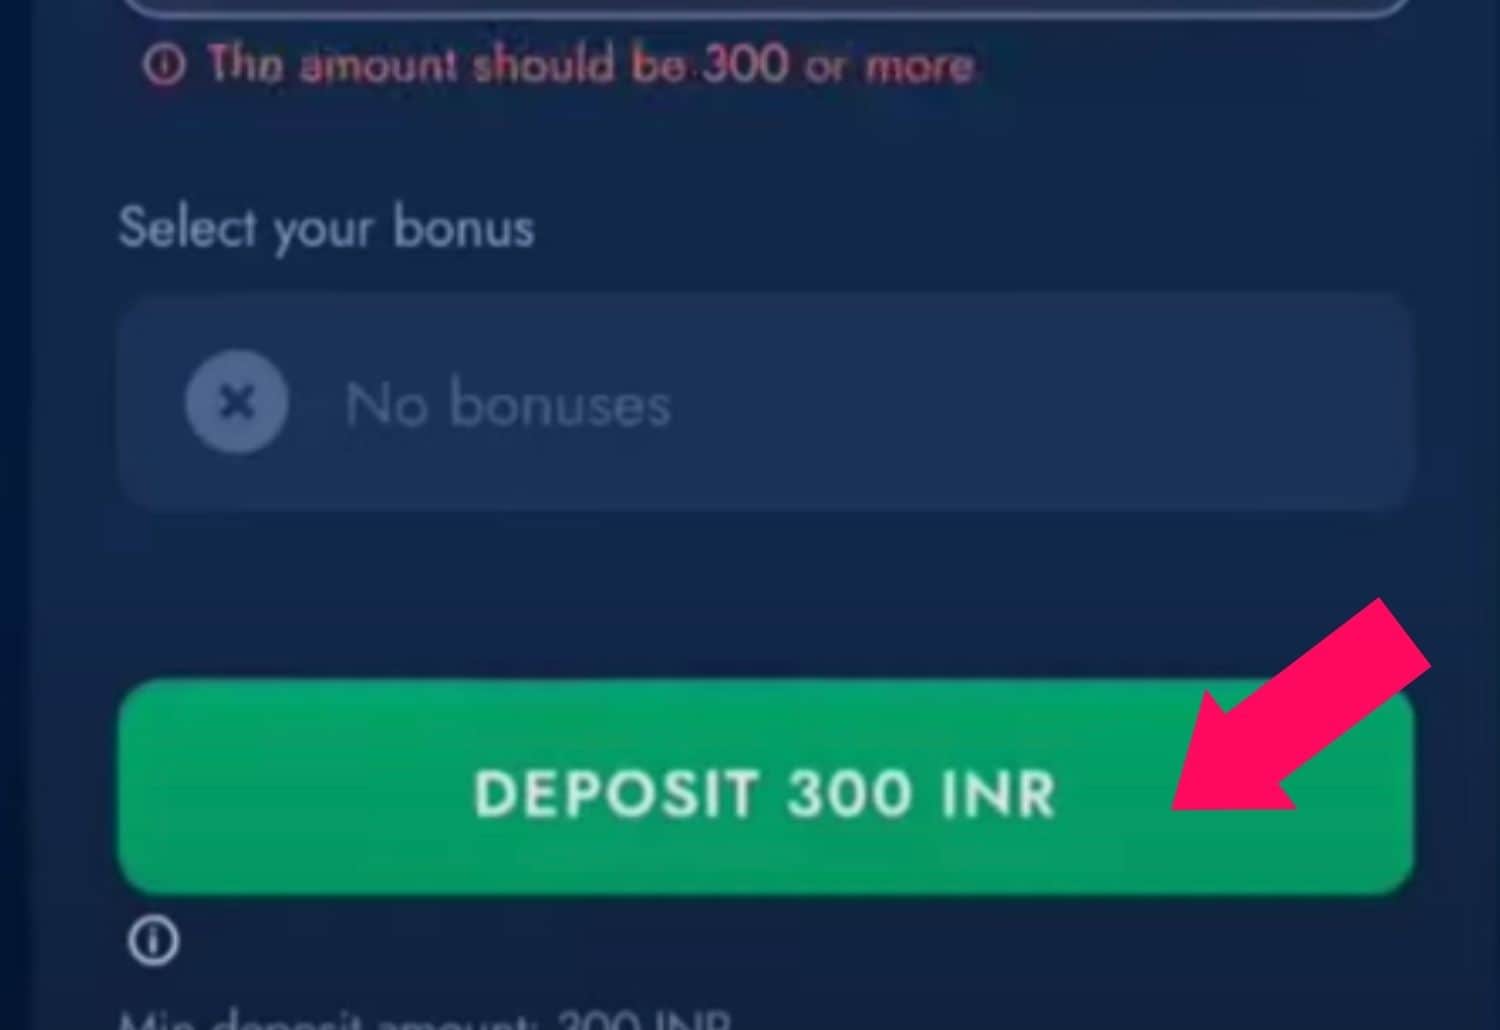 Bluechip Casino India click deposit green button